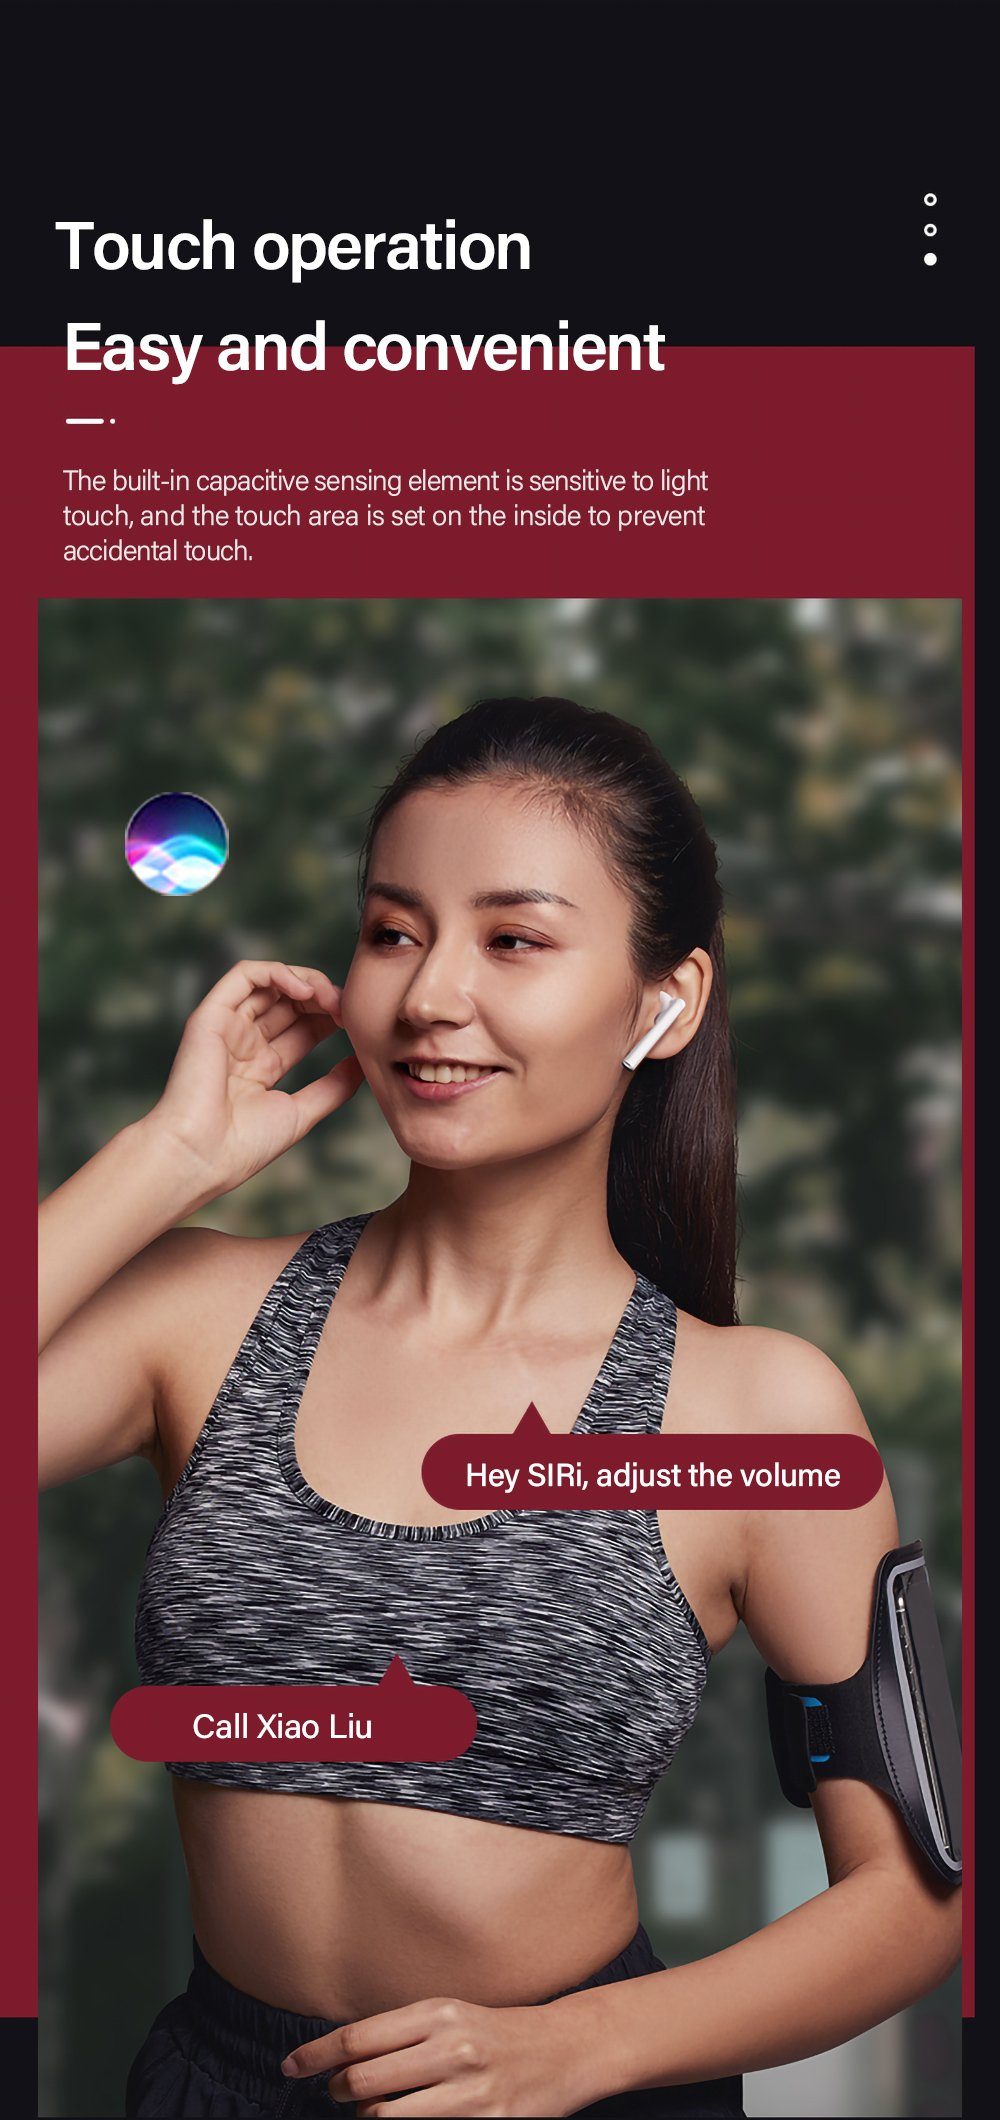 Bluetooth-Kopfhörer Google mit 5.0, Assistant, Schwarz) mit Wireless, (True - 250 mAh Touch-Steuerung Kopfhörer-Ladehülle Siri, Bluetooth XT83 kabellos, Stereo-Ohrhörer Lenovo